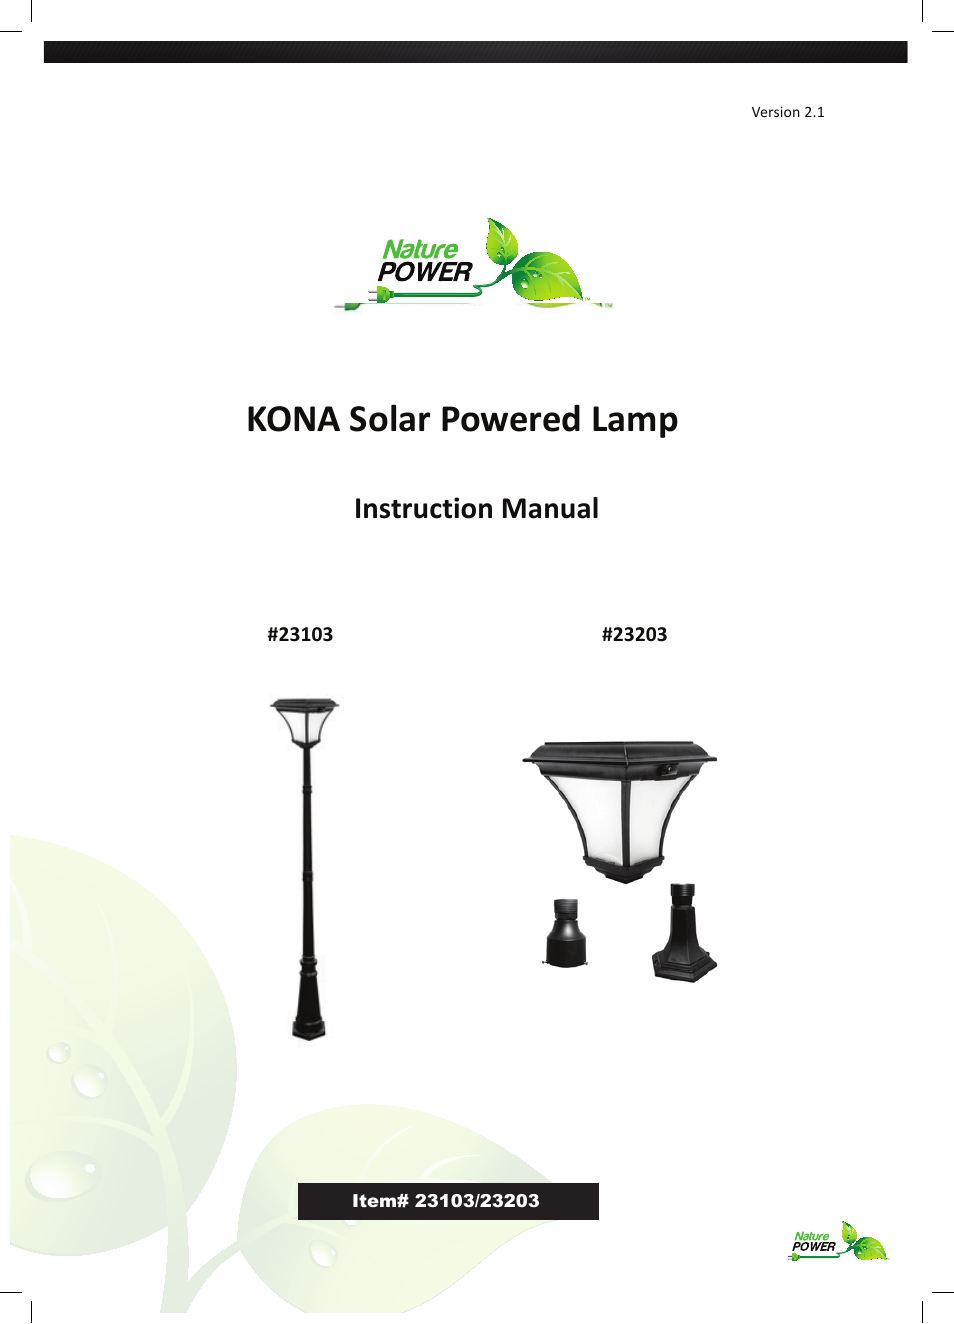 KONA Solar Powered Lamp (23203)